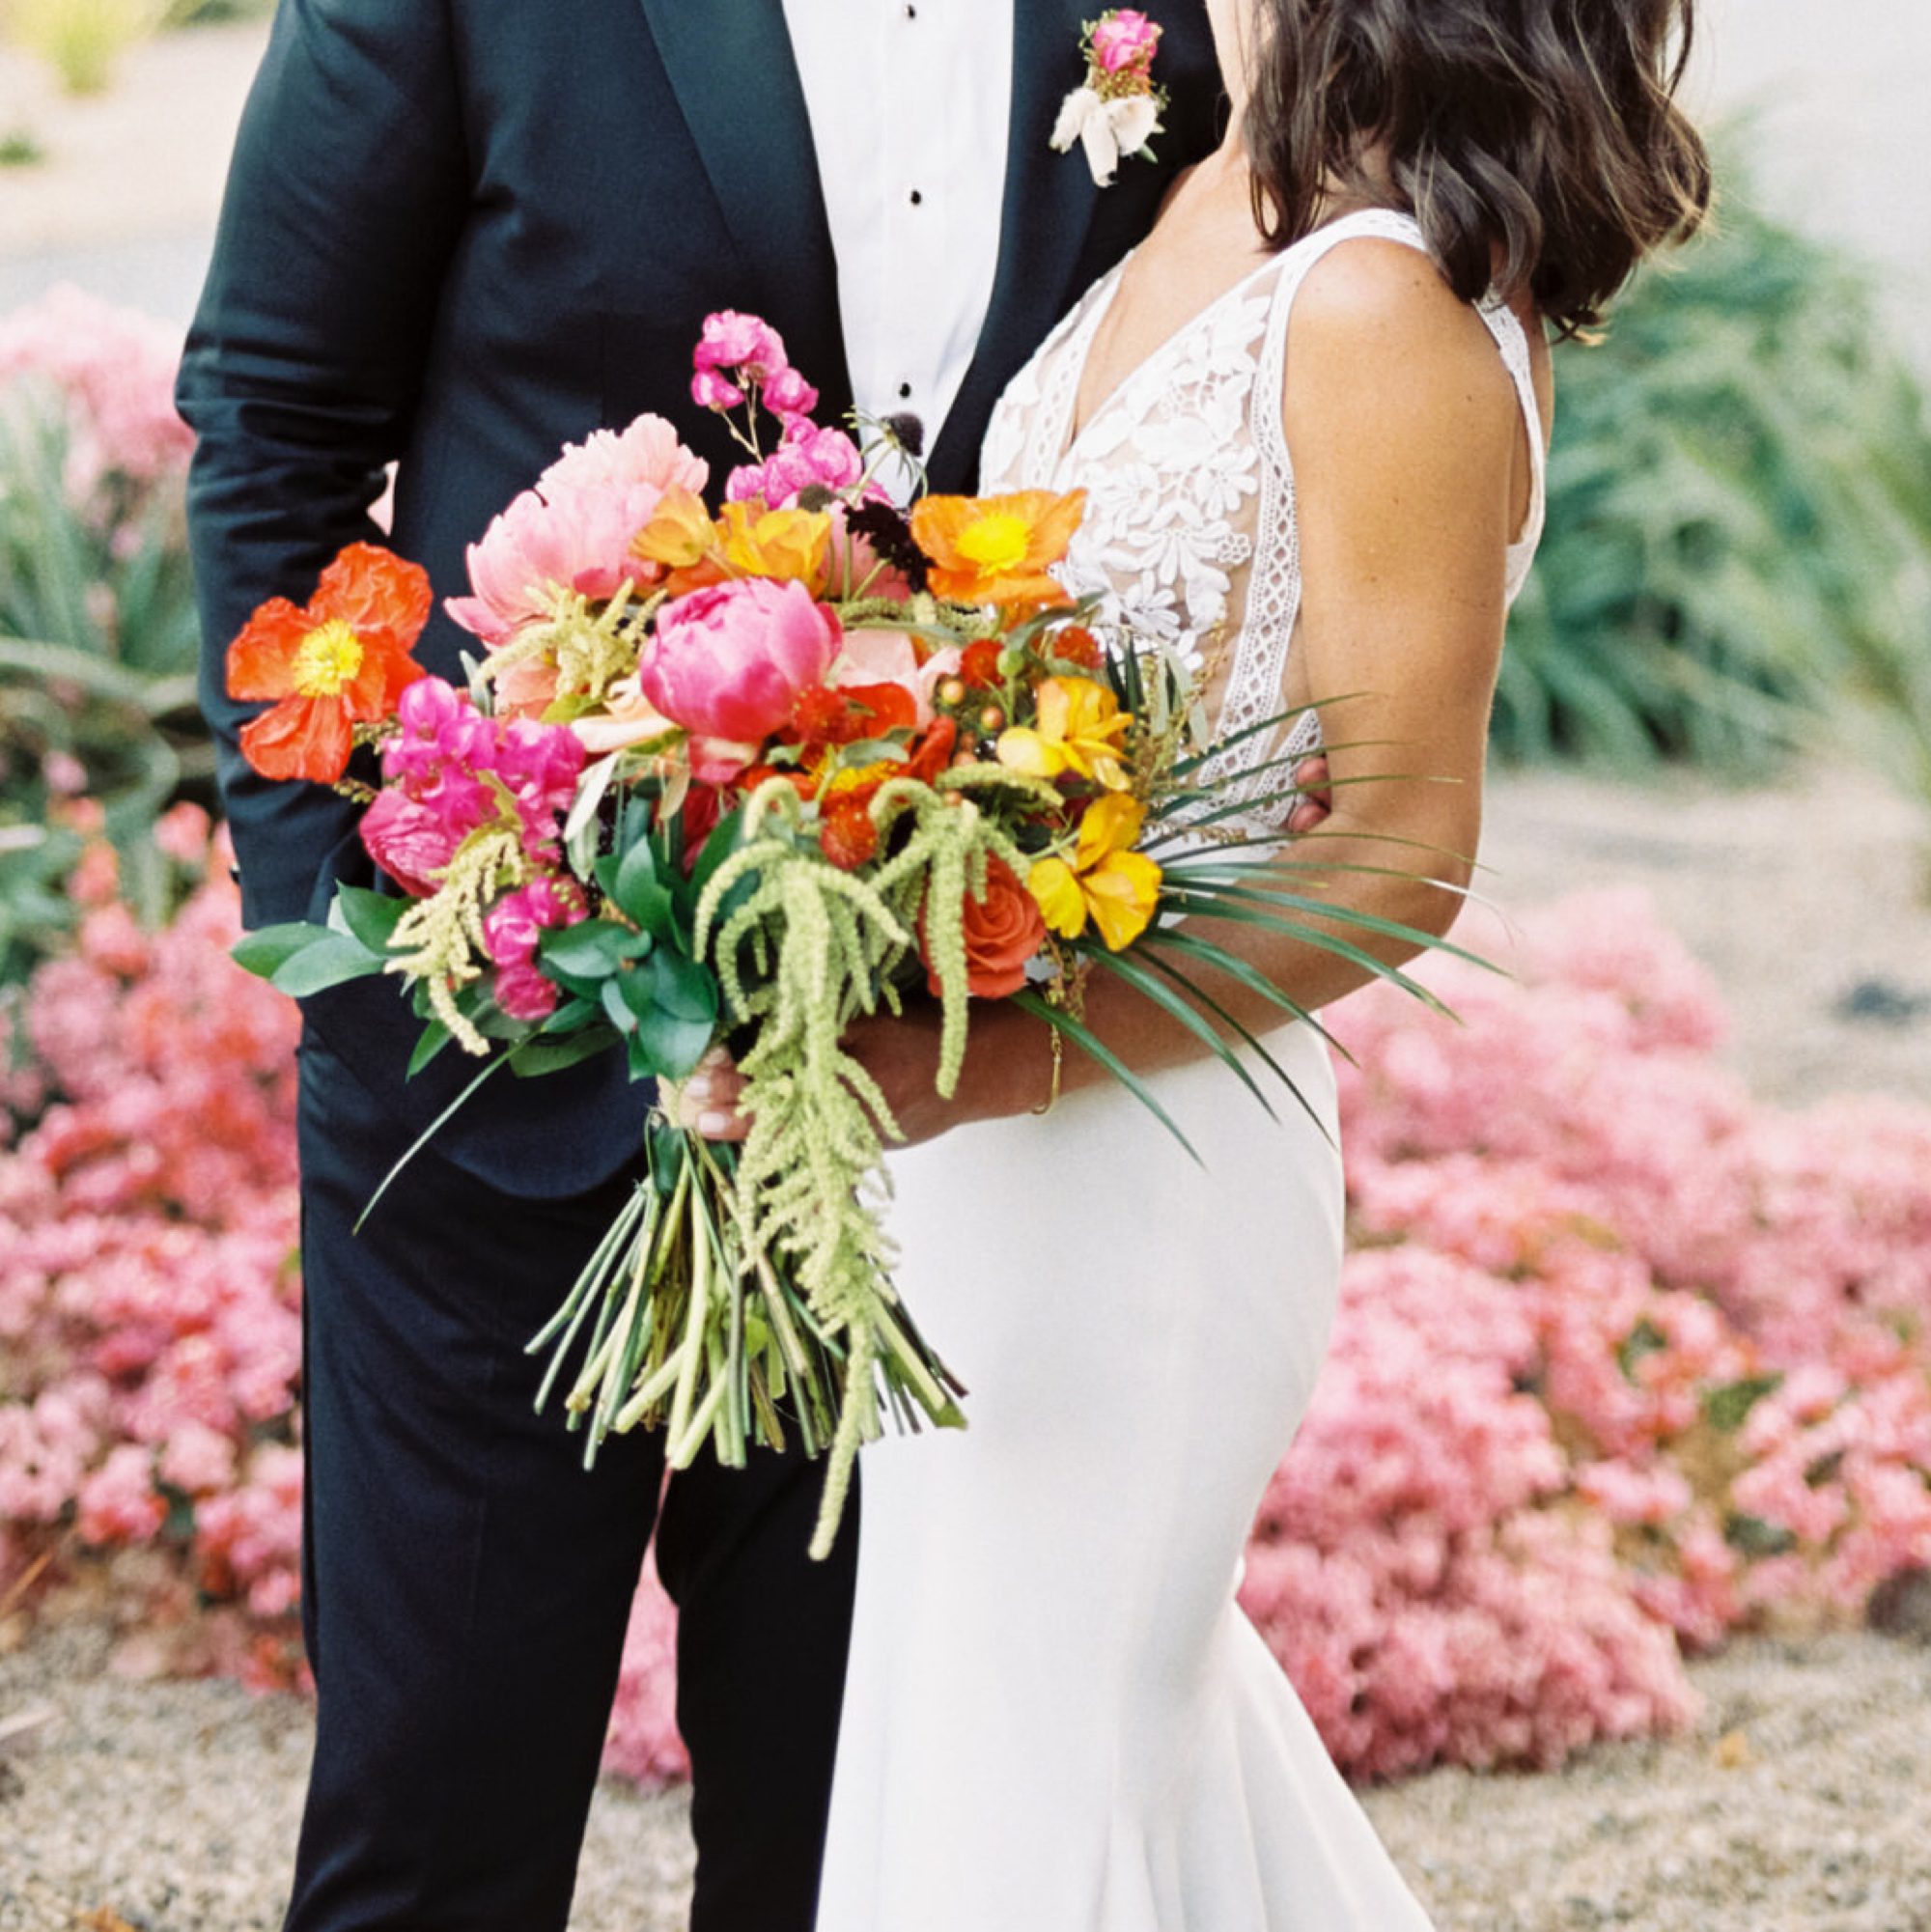 Mexico inspired destination wedding at La Lomita Ranch in San Luis Obispo California by photographer Jessica Sofranko